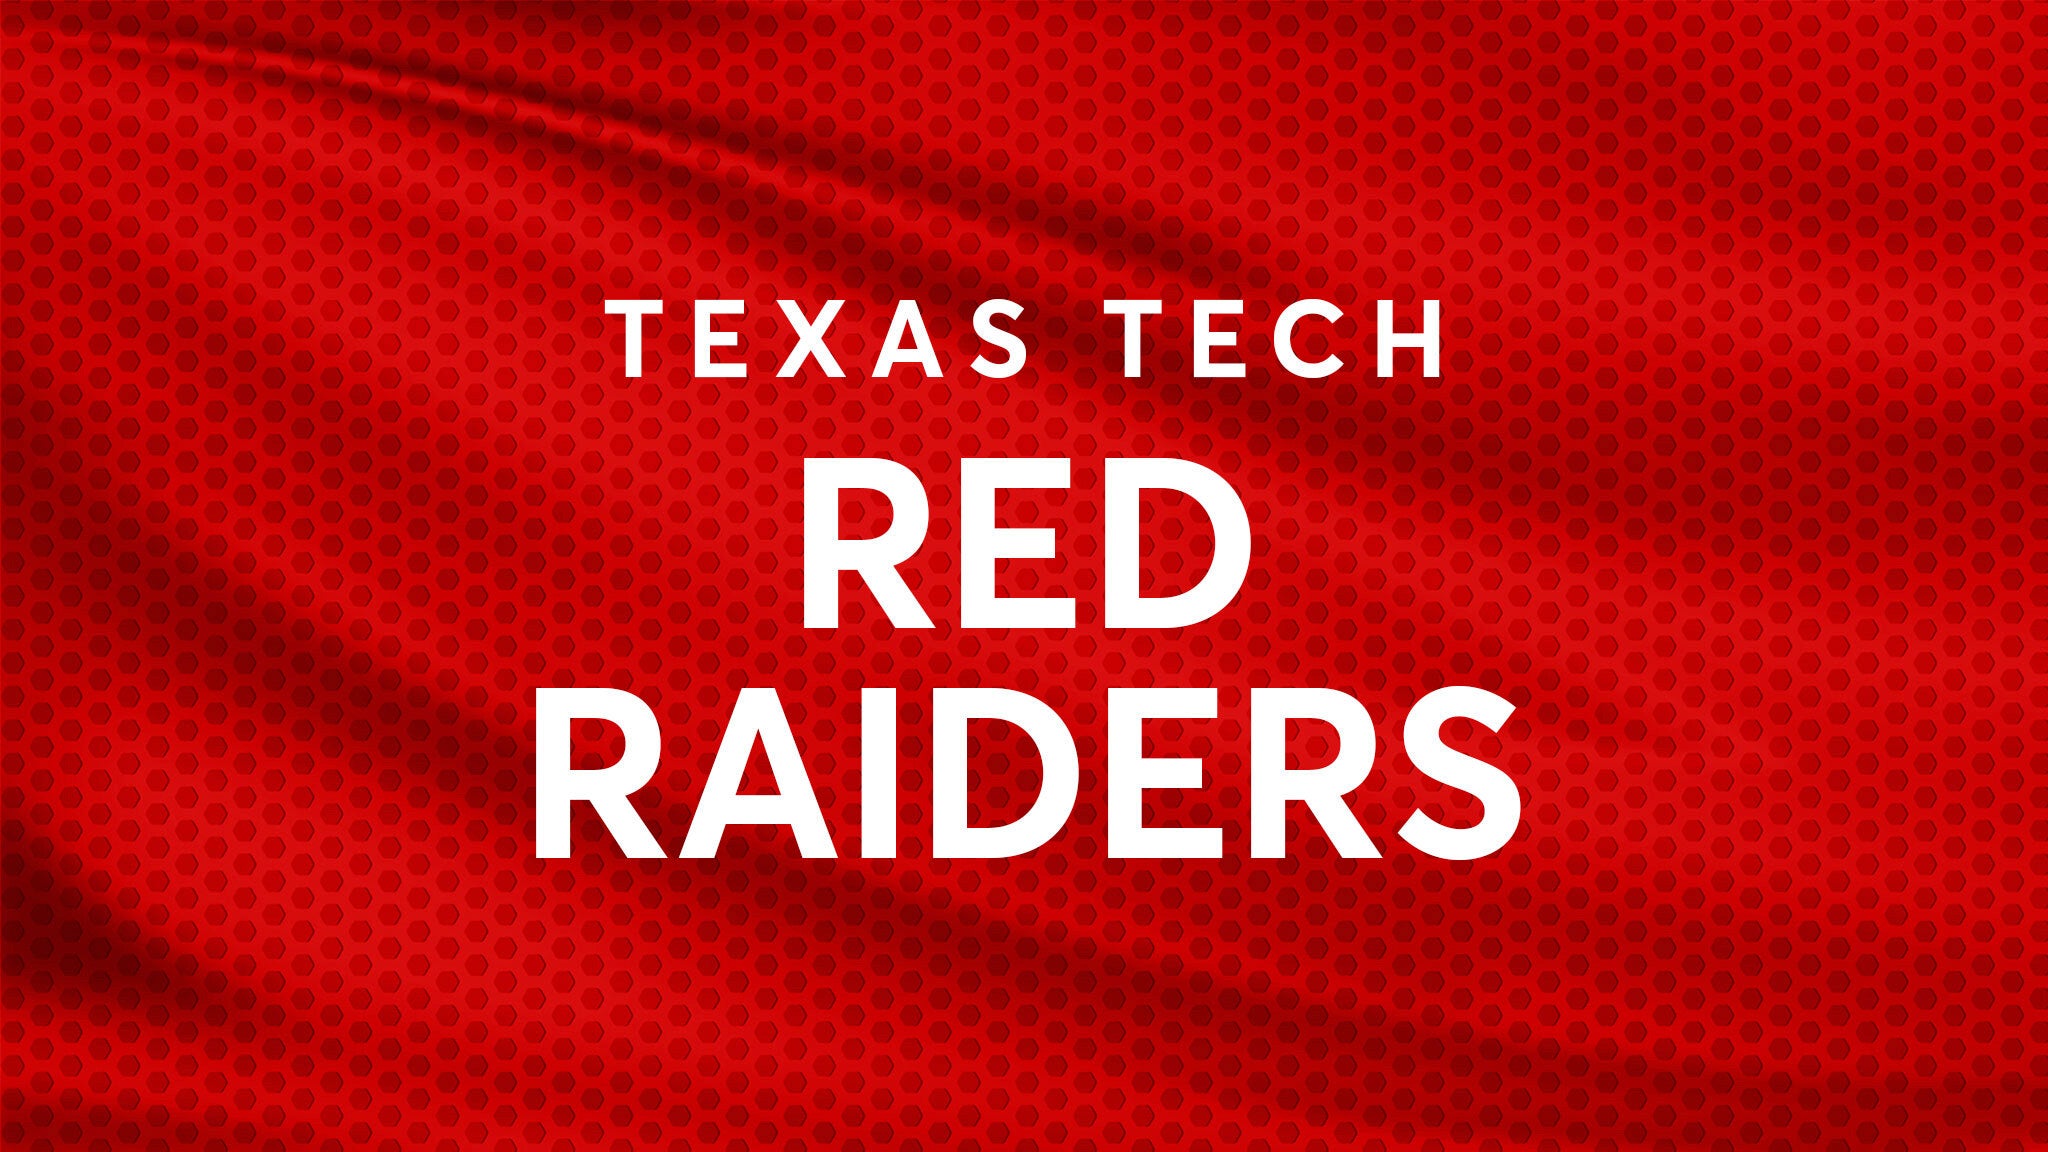 Texas Tech Red Raiders Football vs. North Texas Mean Green Football hero